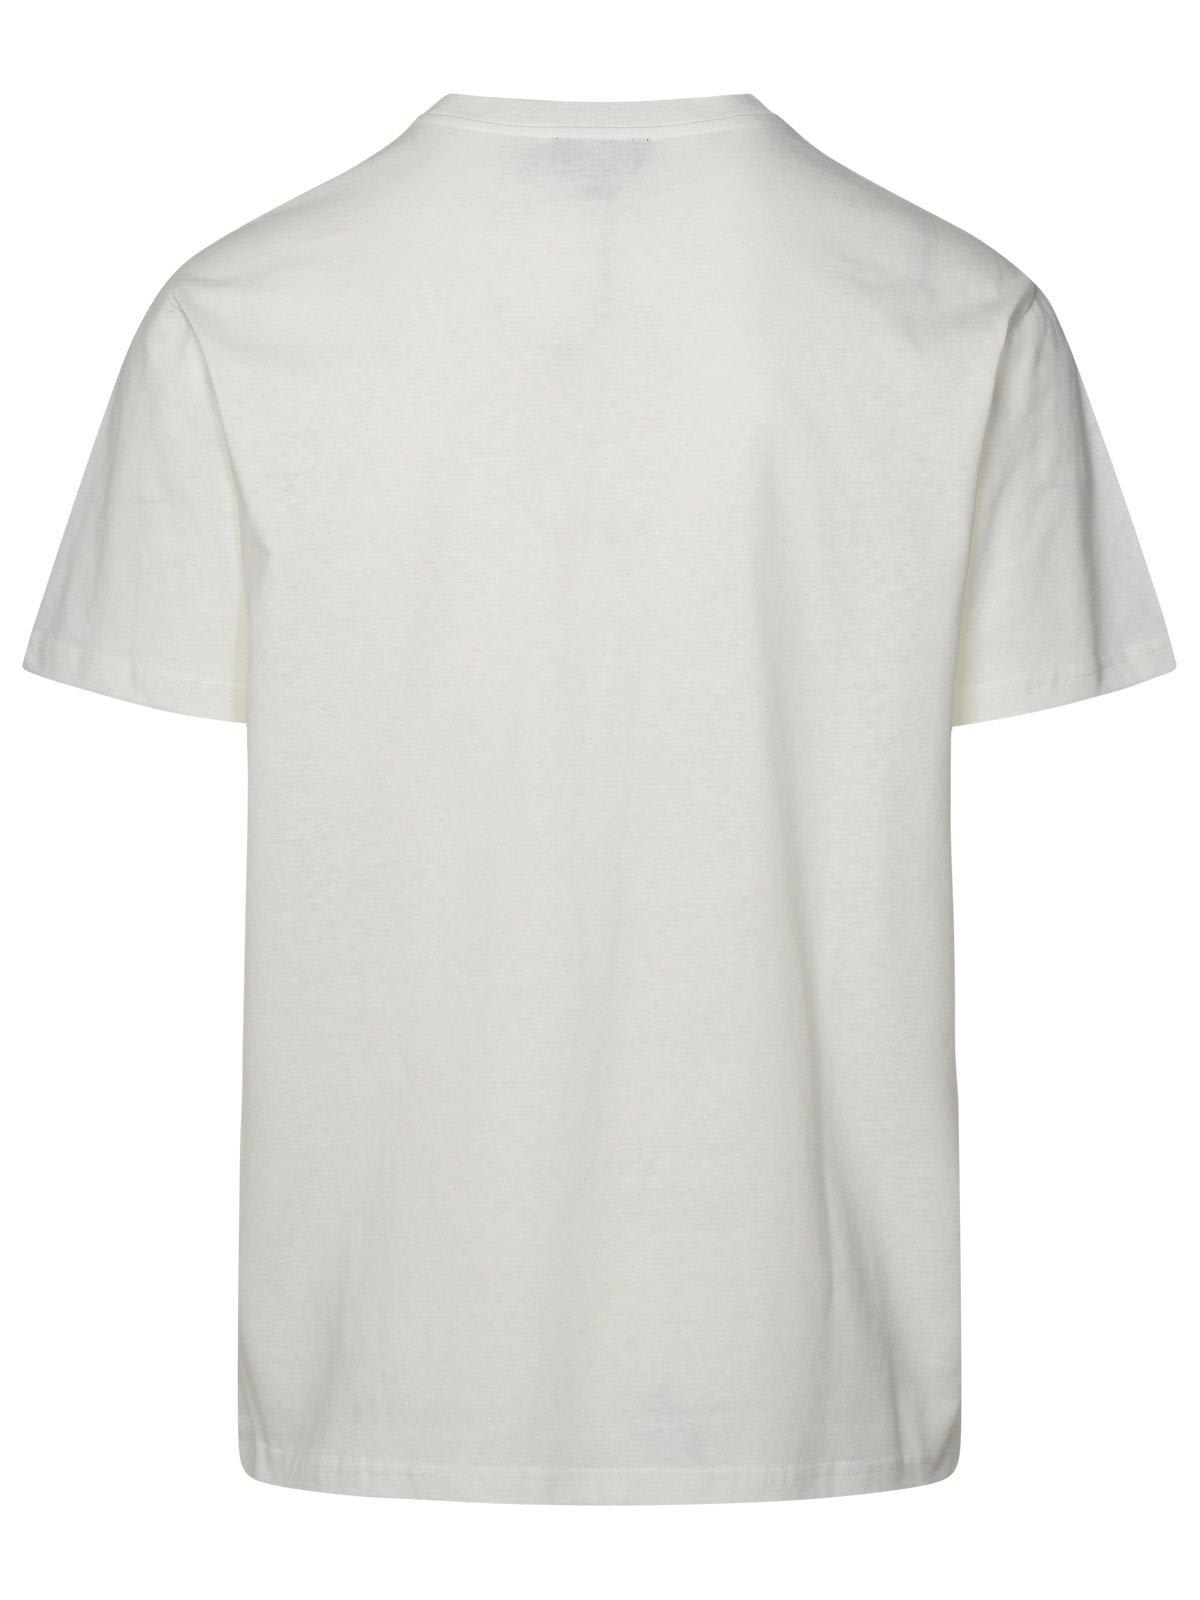 Shop Apc Graphic Printed Crewneck T-shirt In White